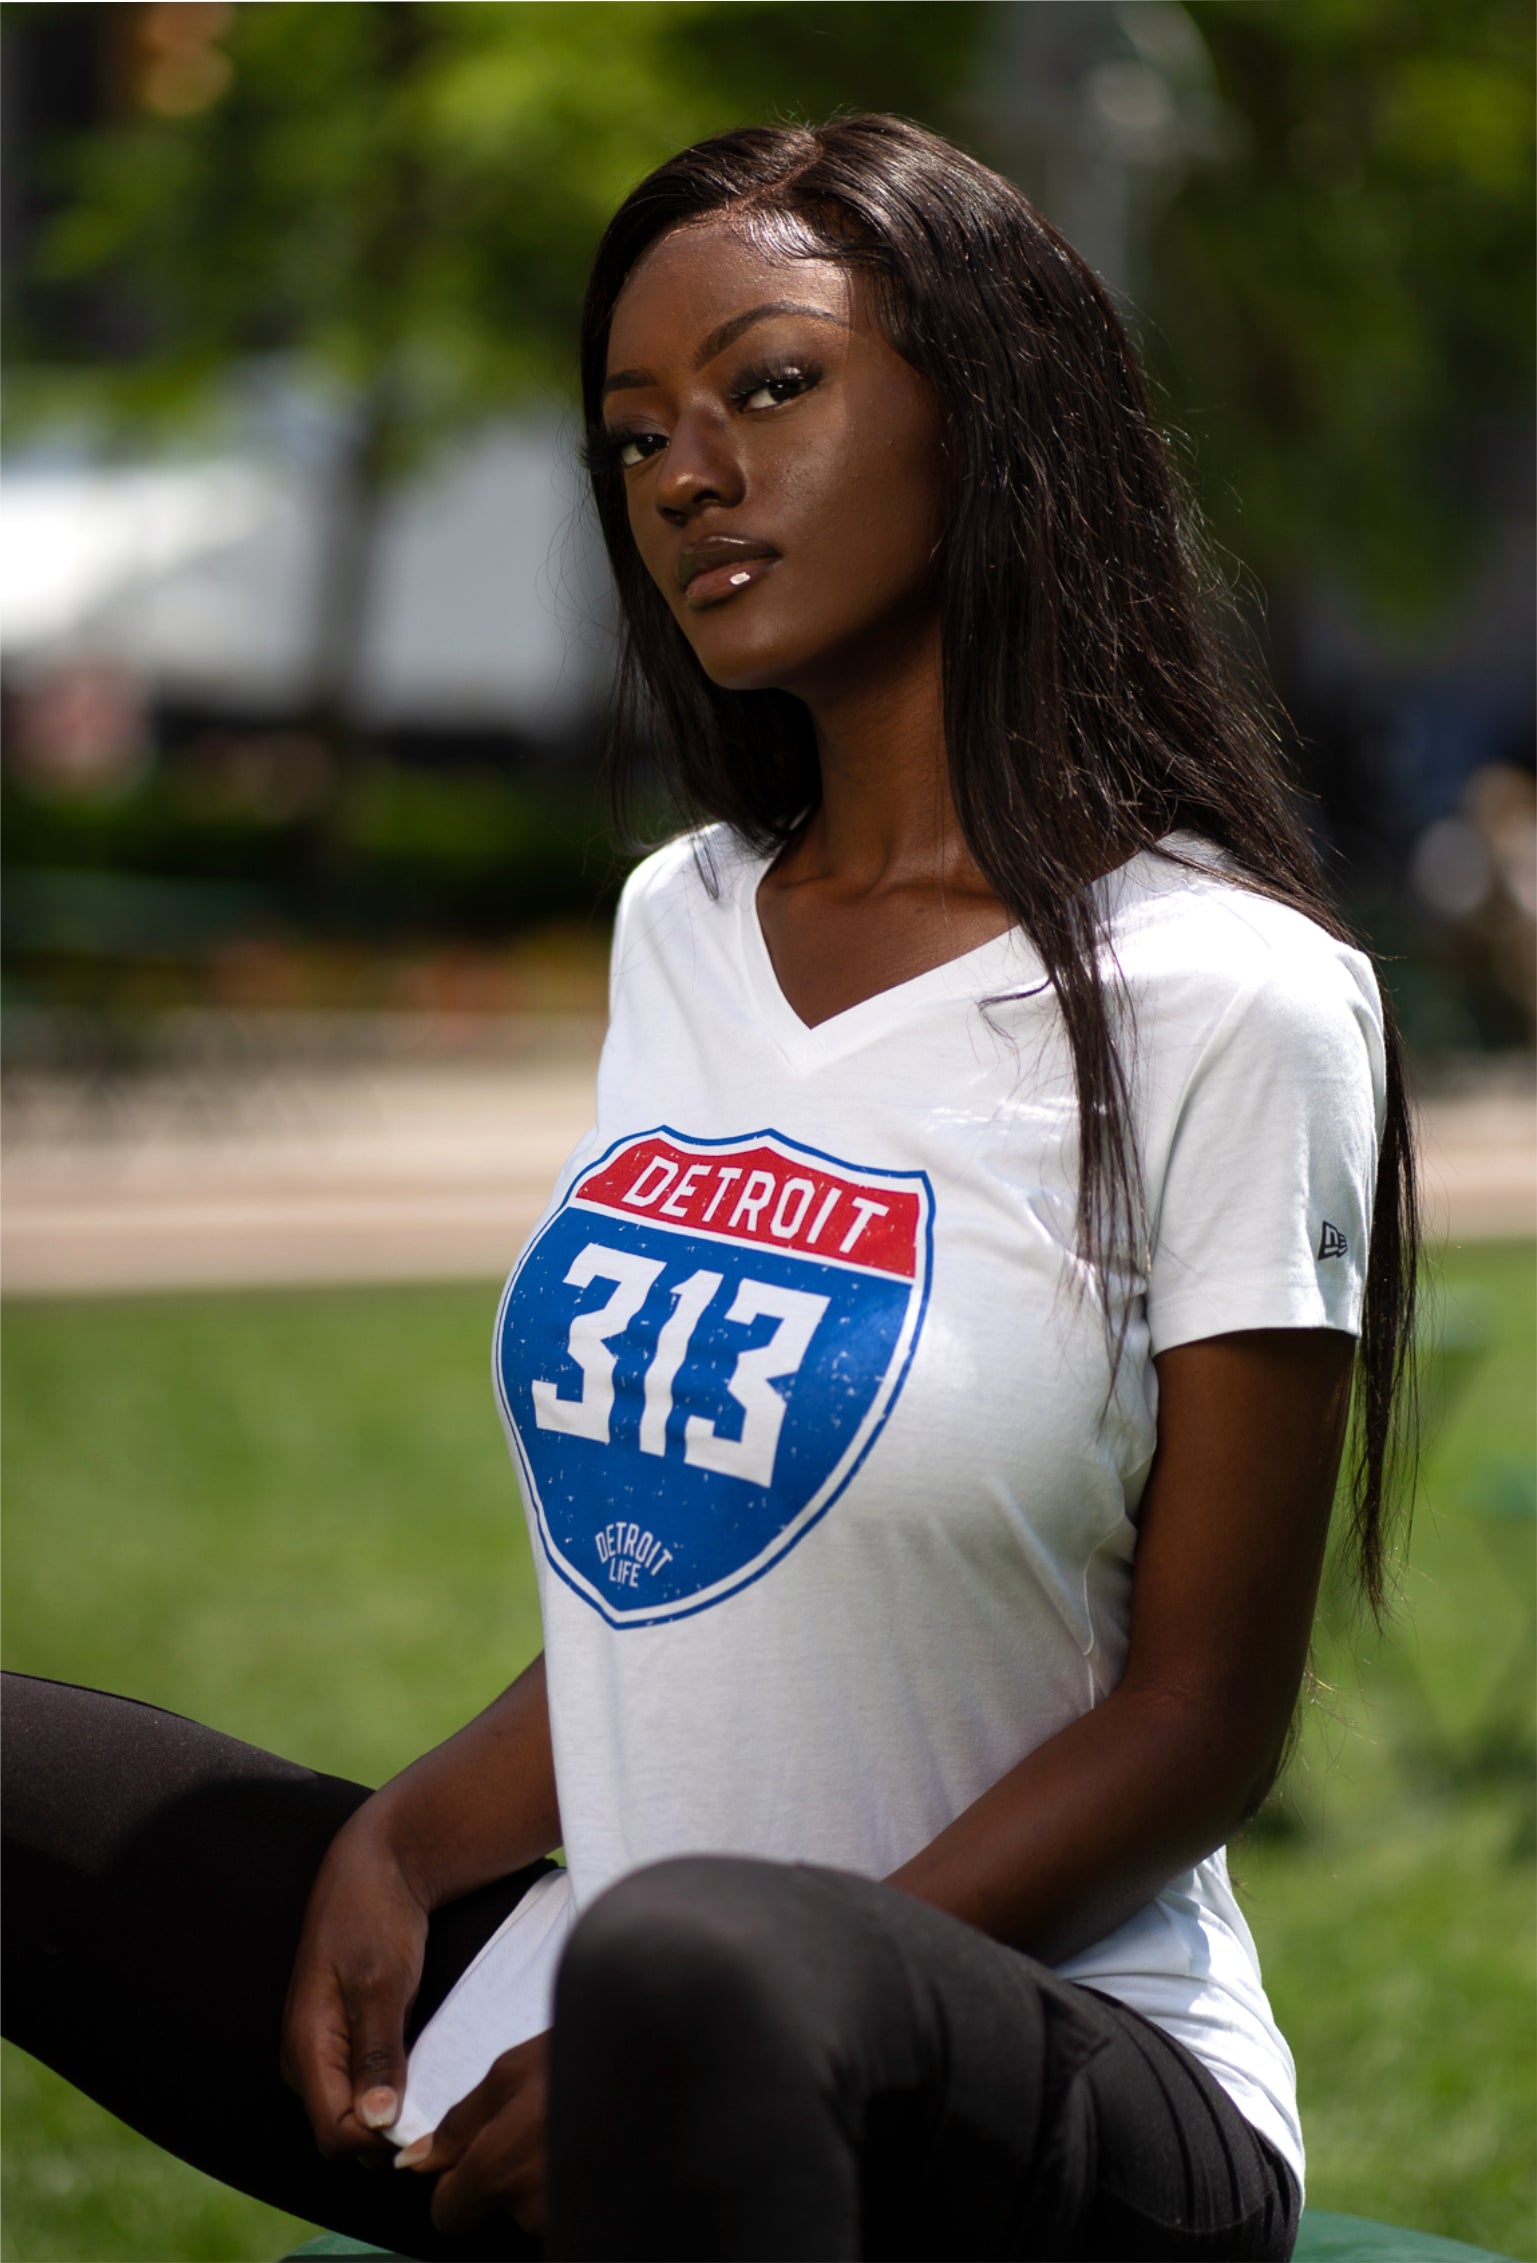 Detroit 313 Interstate Sign T Shirt Women-S / White/Red/Blue